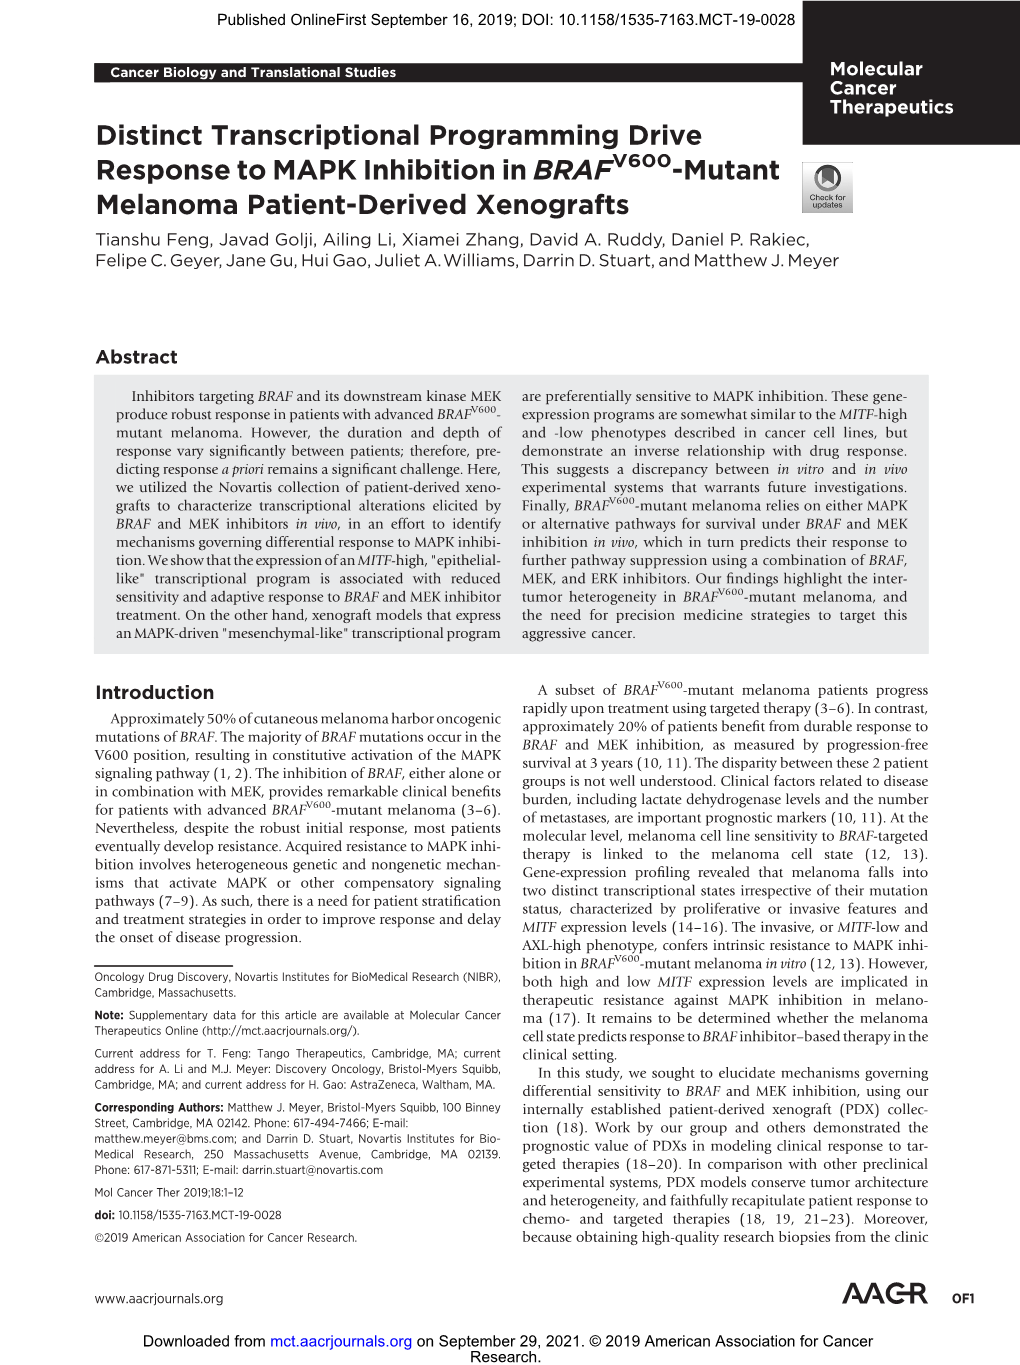 Distinct Transcriptional Programming Drive Response to MAPK Inhibition in BRAF -Mutant Melanoma Patient-Derived Xenografts